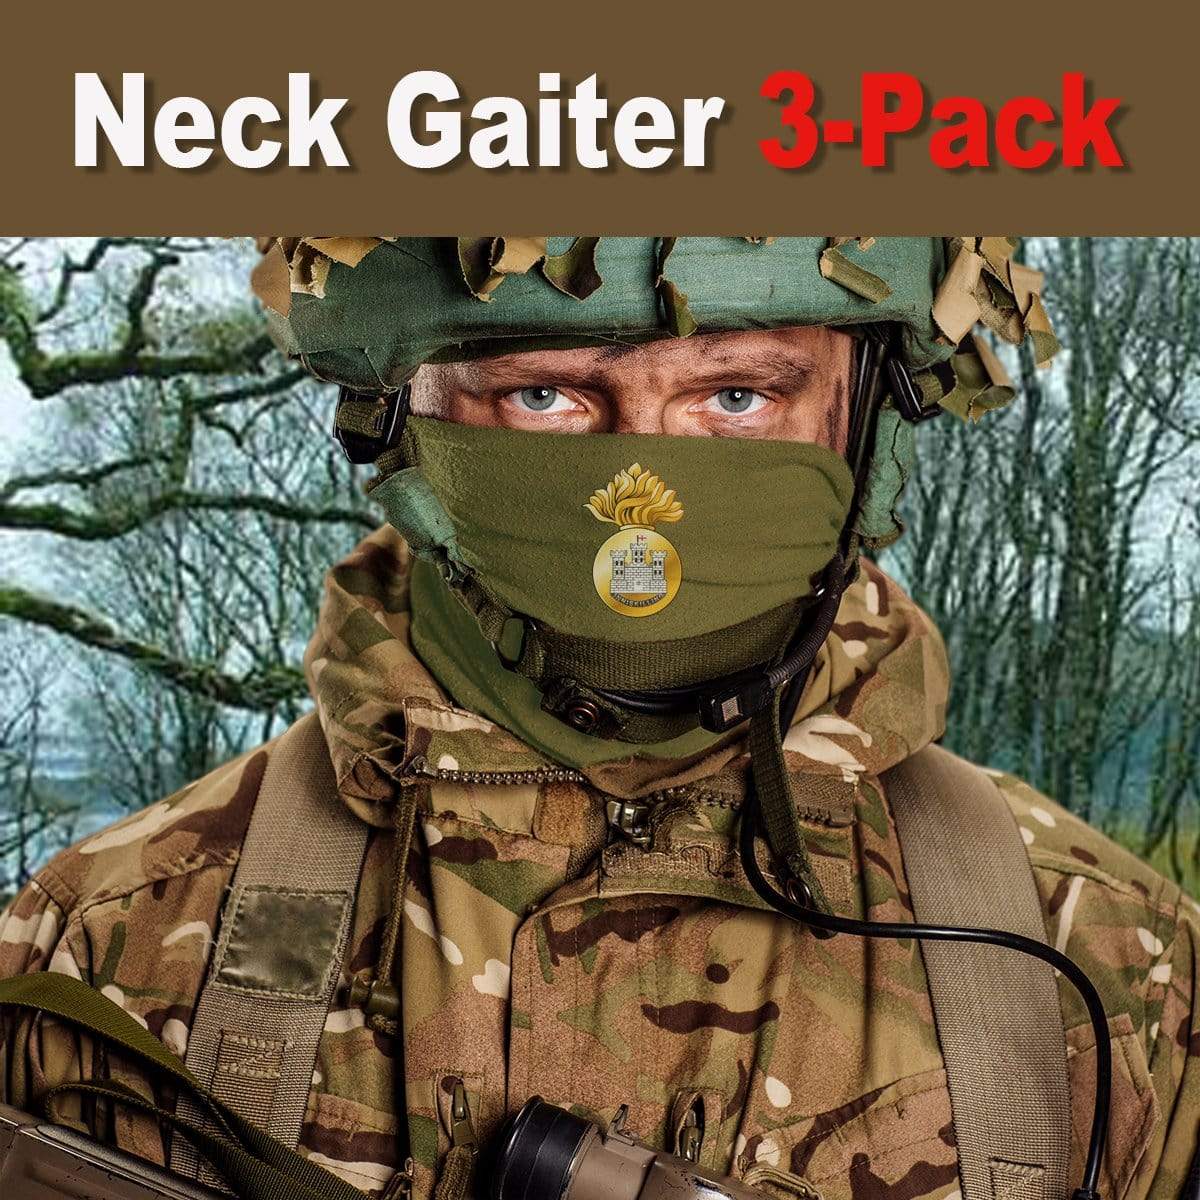 neck gaiter Bandana 3-Pack - Royal Inniskilling Fusiliers Neck Gaiter 3-Pack Royal Inniskilling Fusiliers Neck Gaiter/Headover 3-Pack